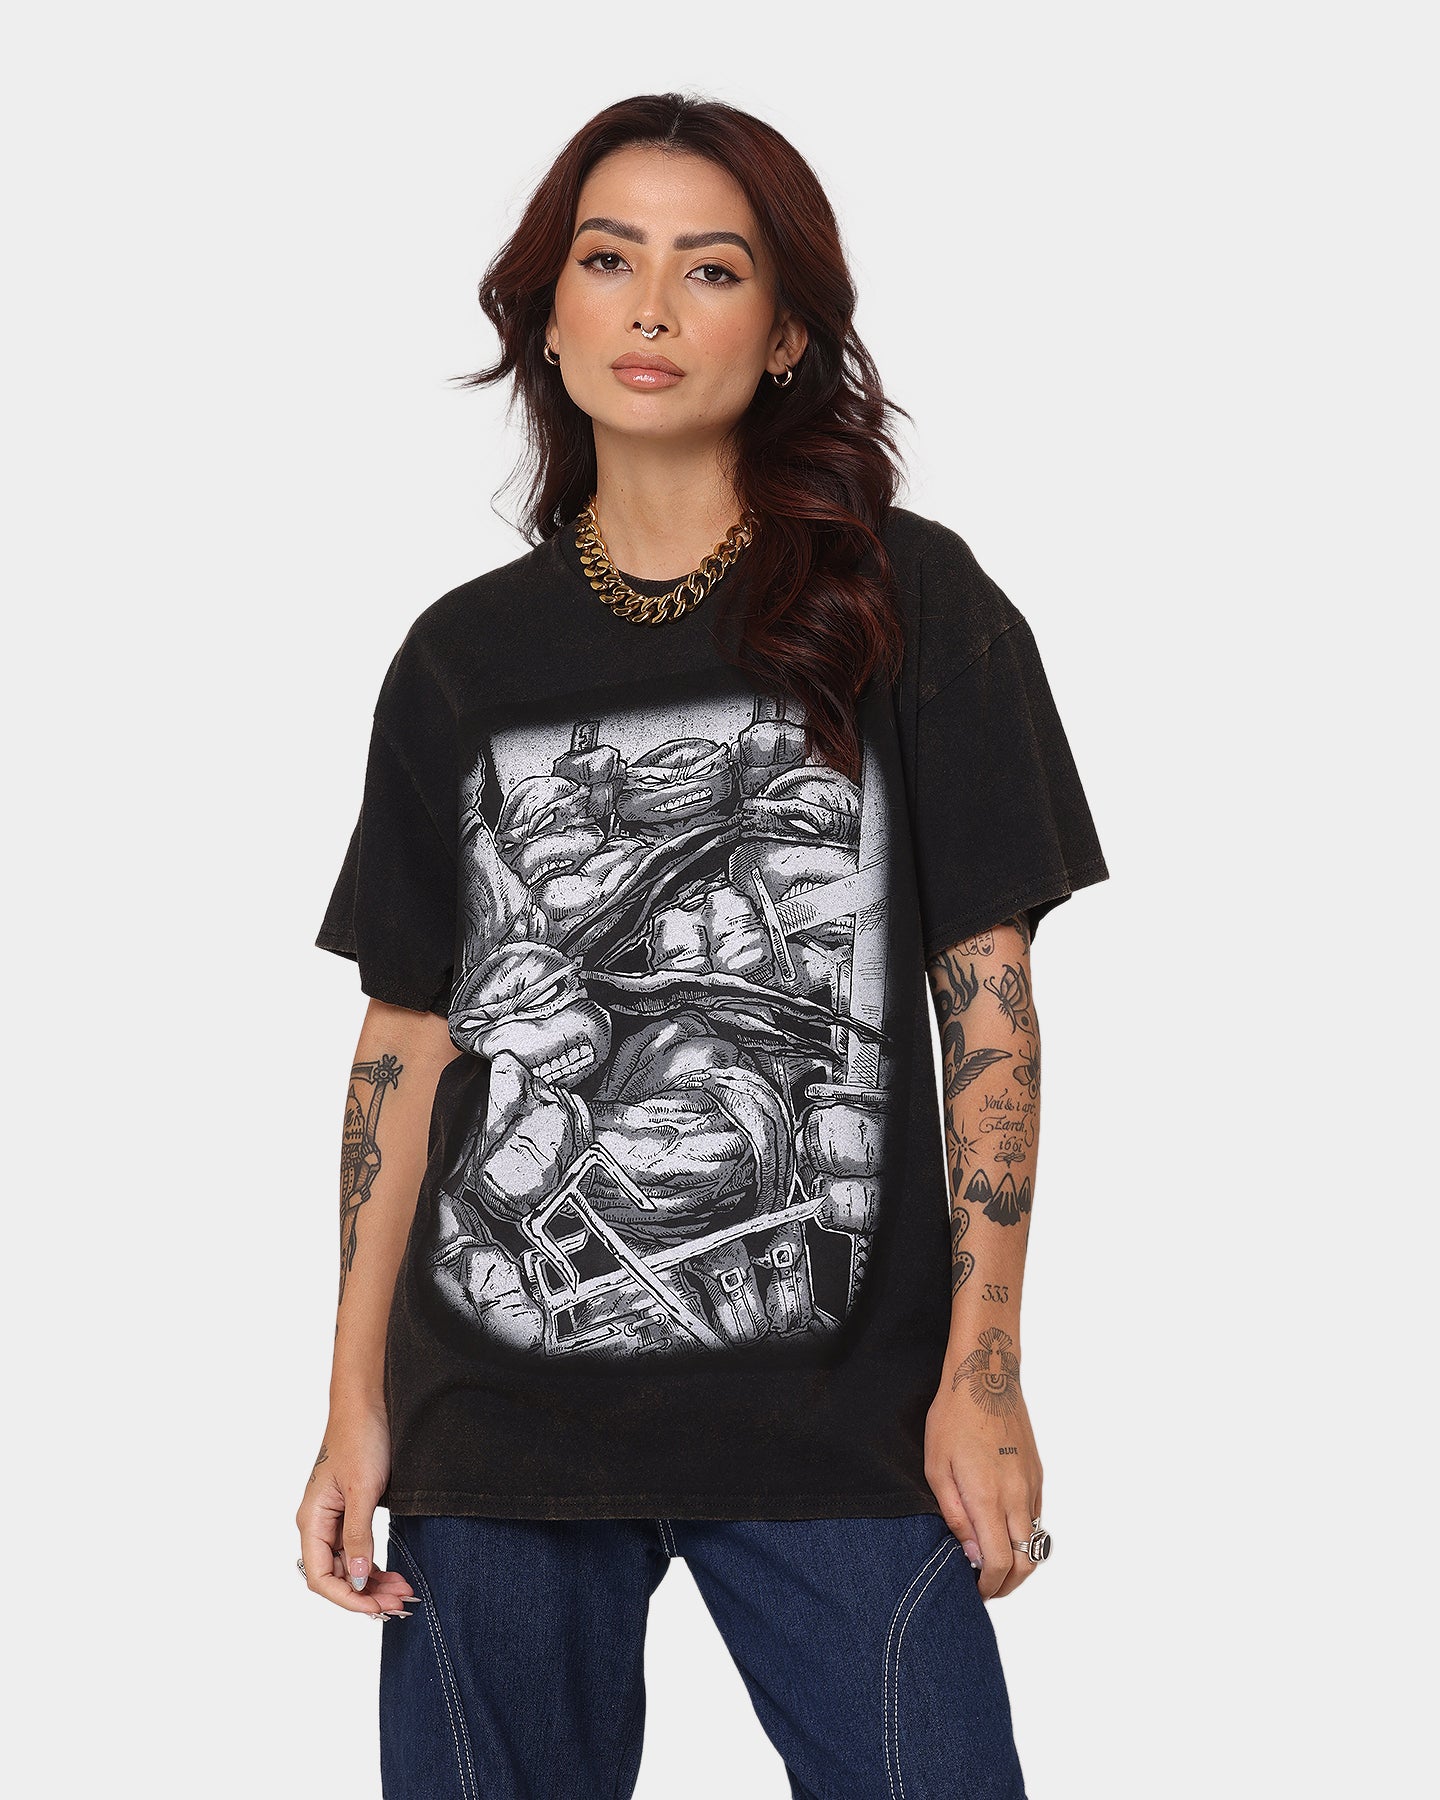 https://www.culturekintg.shop/wp-content/uploads/1694/89/only-12-97-usd-for-american-thrift-american-thrift-x-teenage-mutant-ninja-turtles-vintage-t-shirt-vintage-black-online-at-the-shop_0.jpg